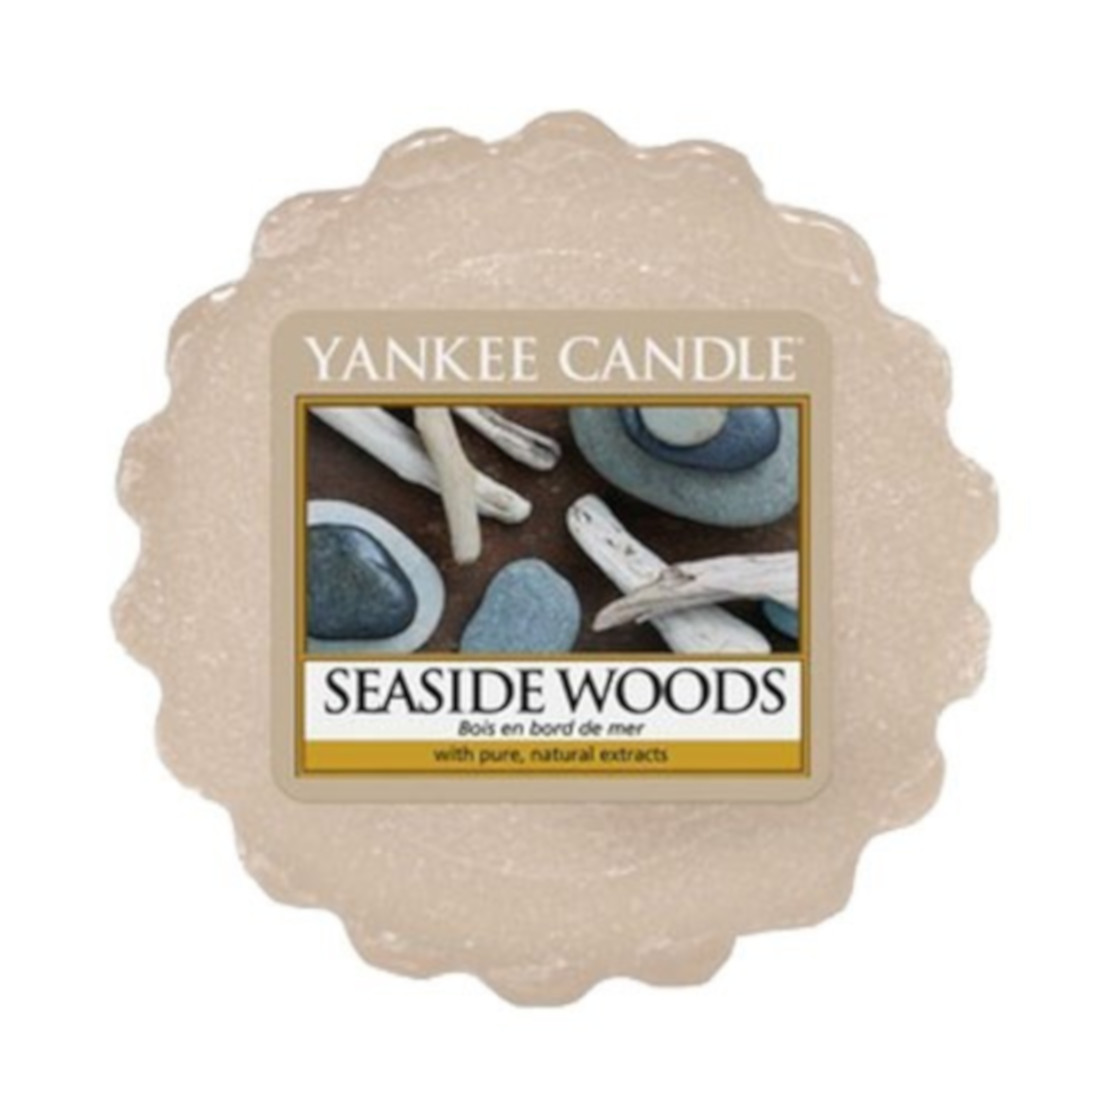 Yankee Candle Seaside Woods Wax Melt Tart